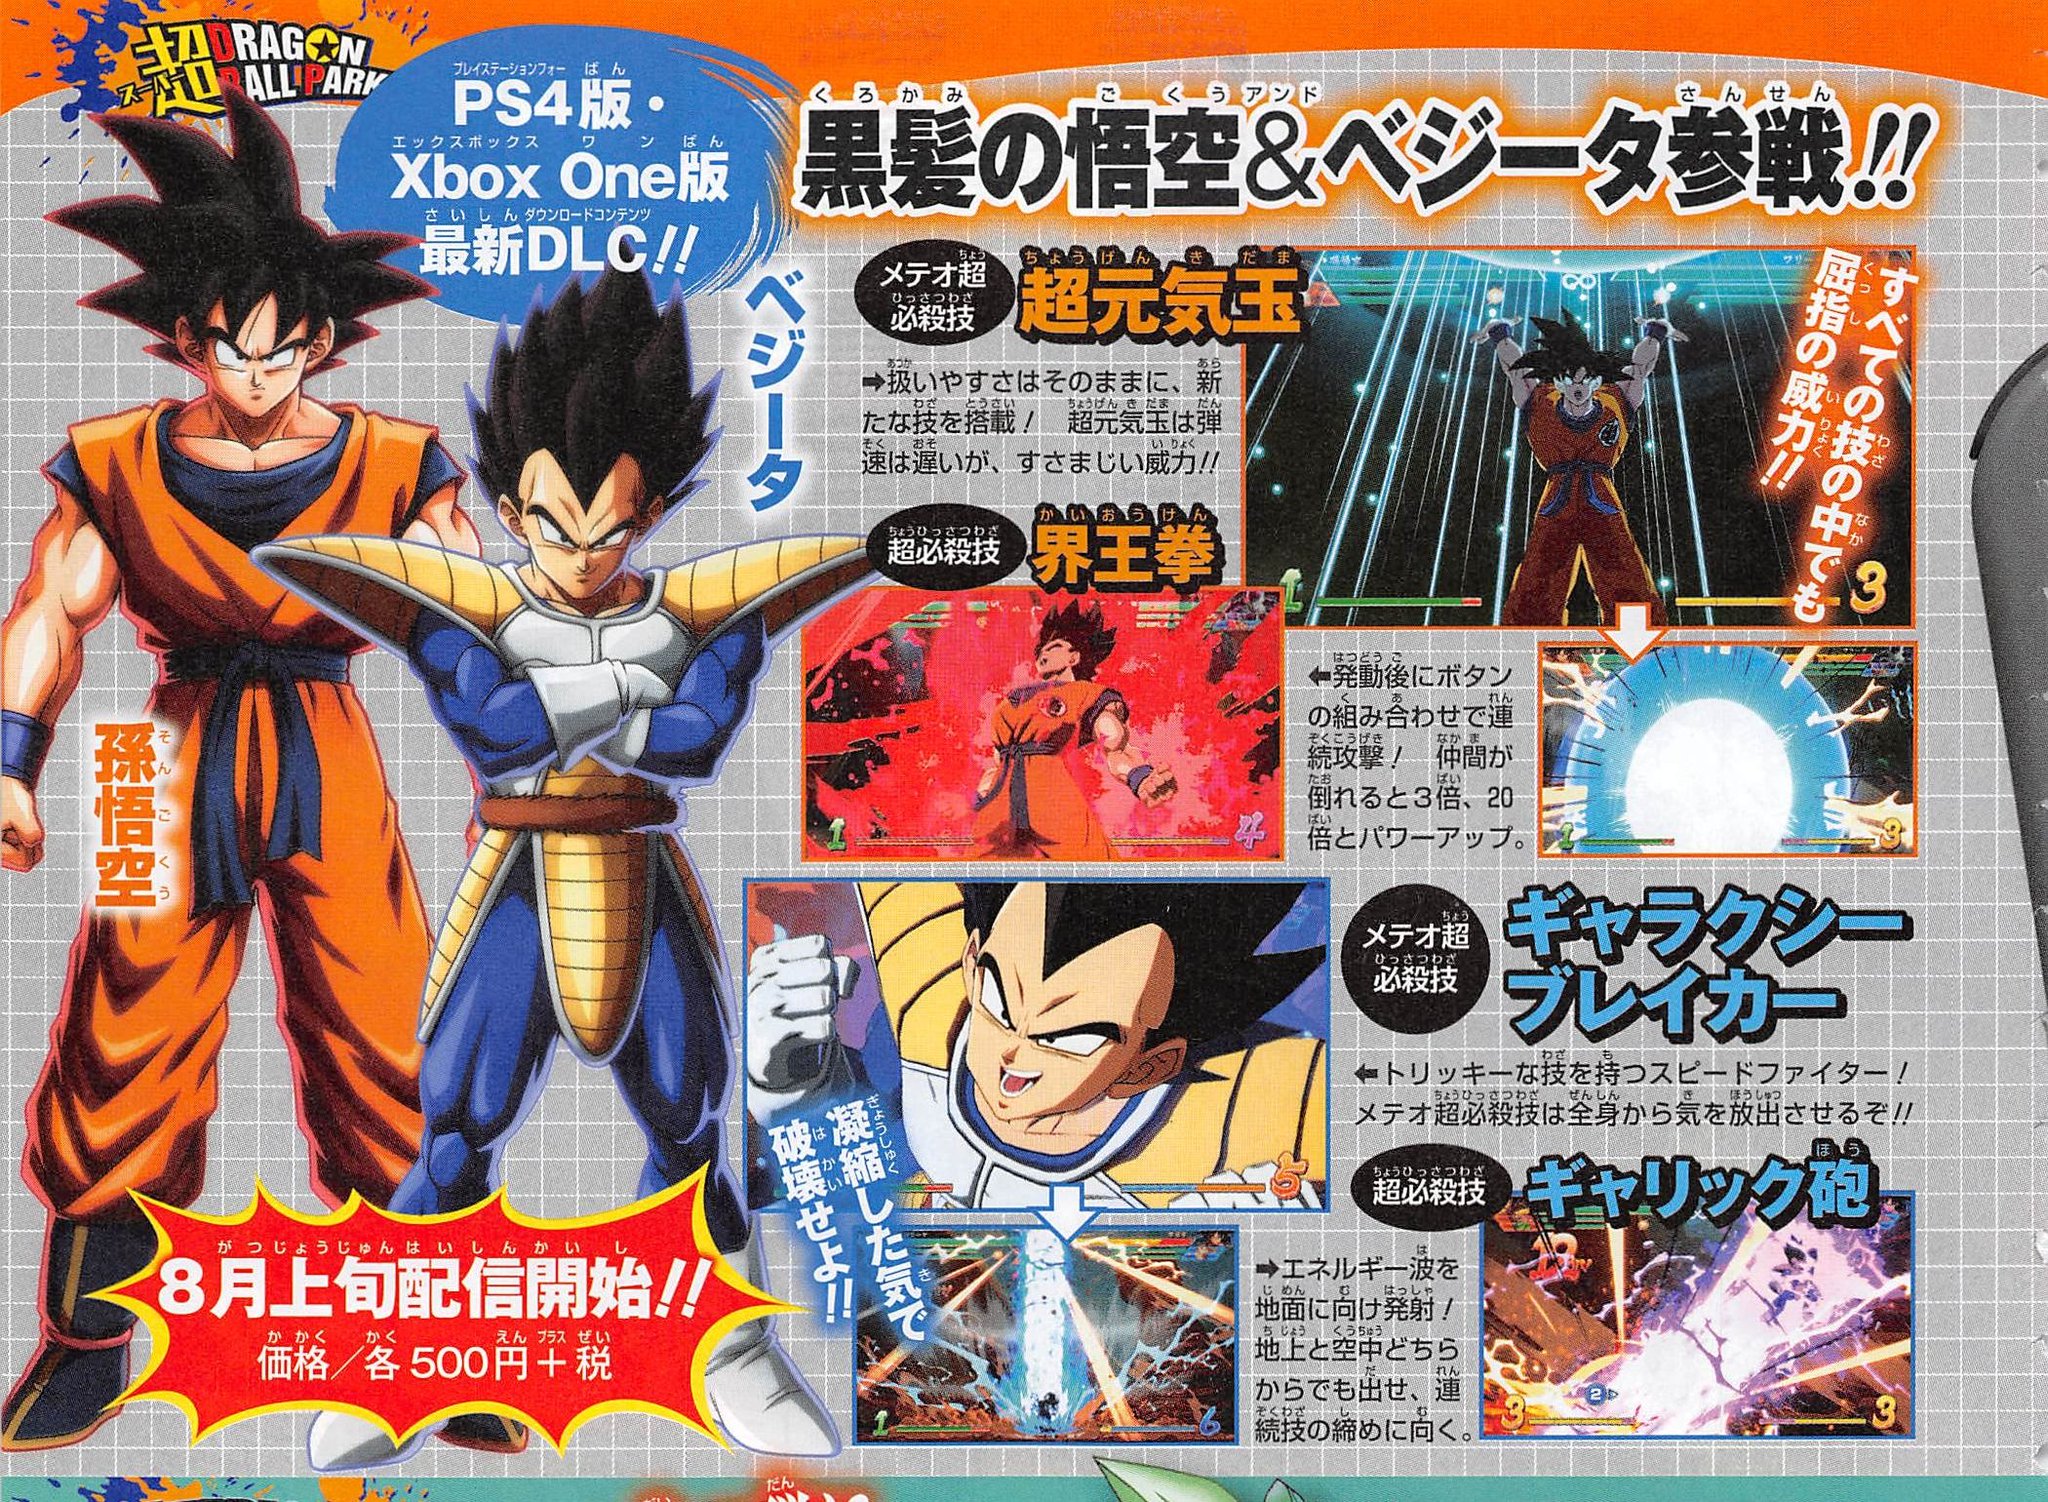 Dragon Ball FighterZ - Goku and Vegeta